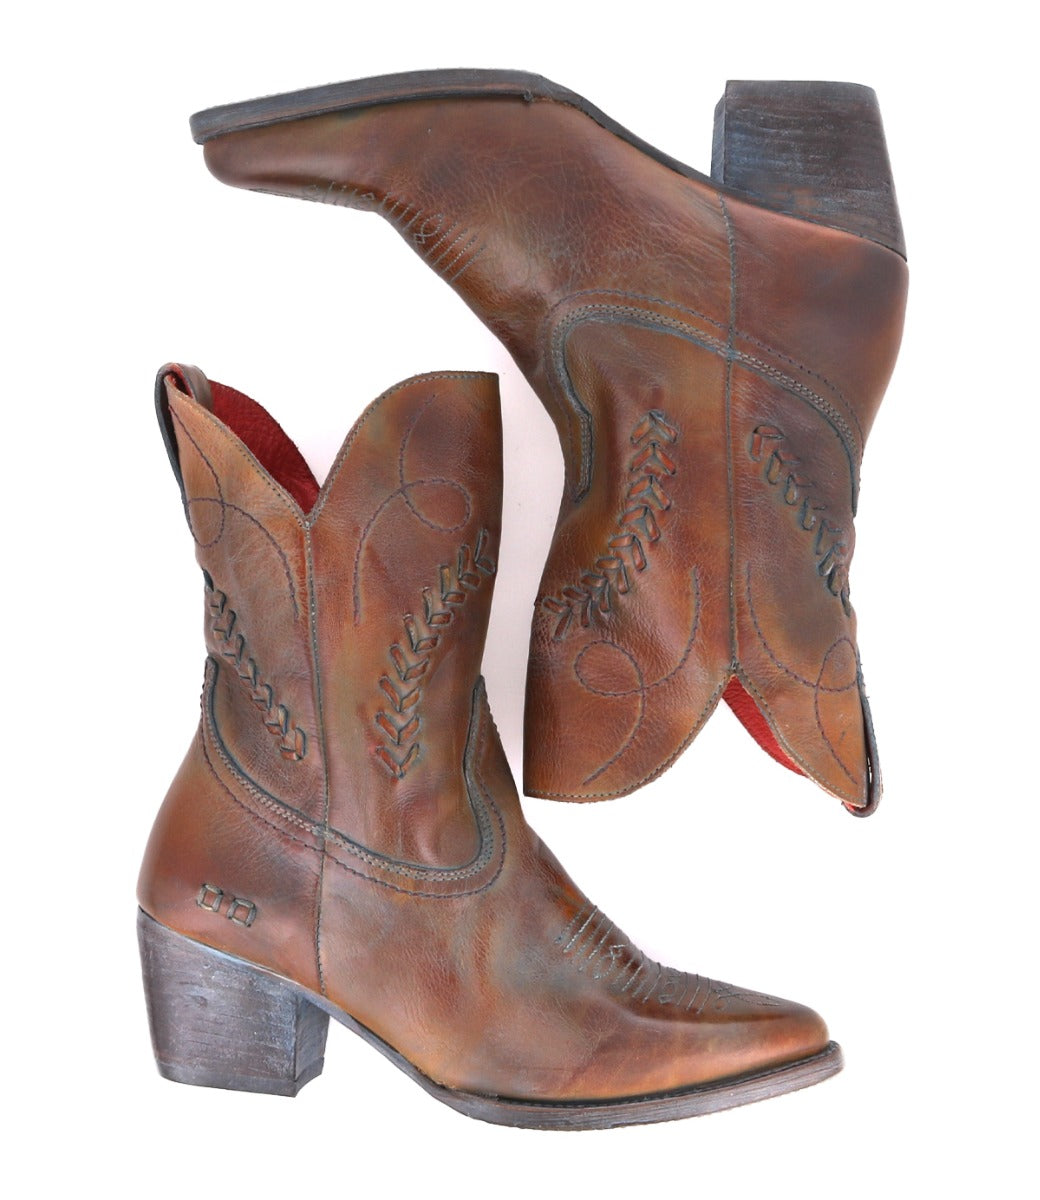 A pair of Bed Stu Amanda II women's brown cowboy boots.